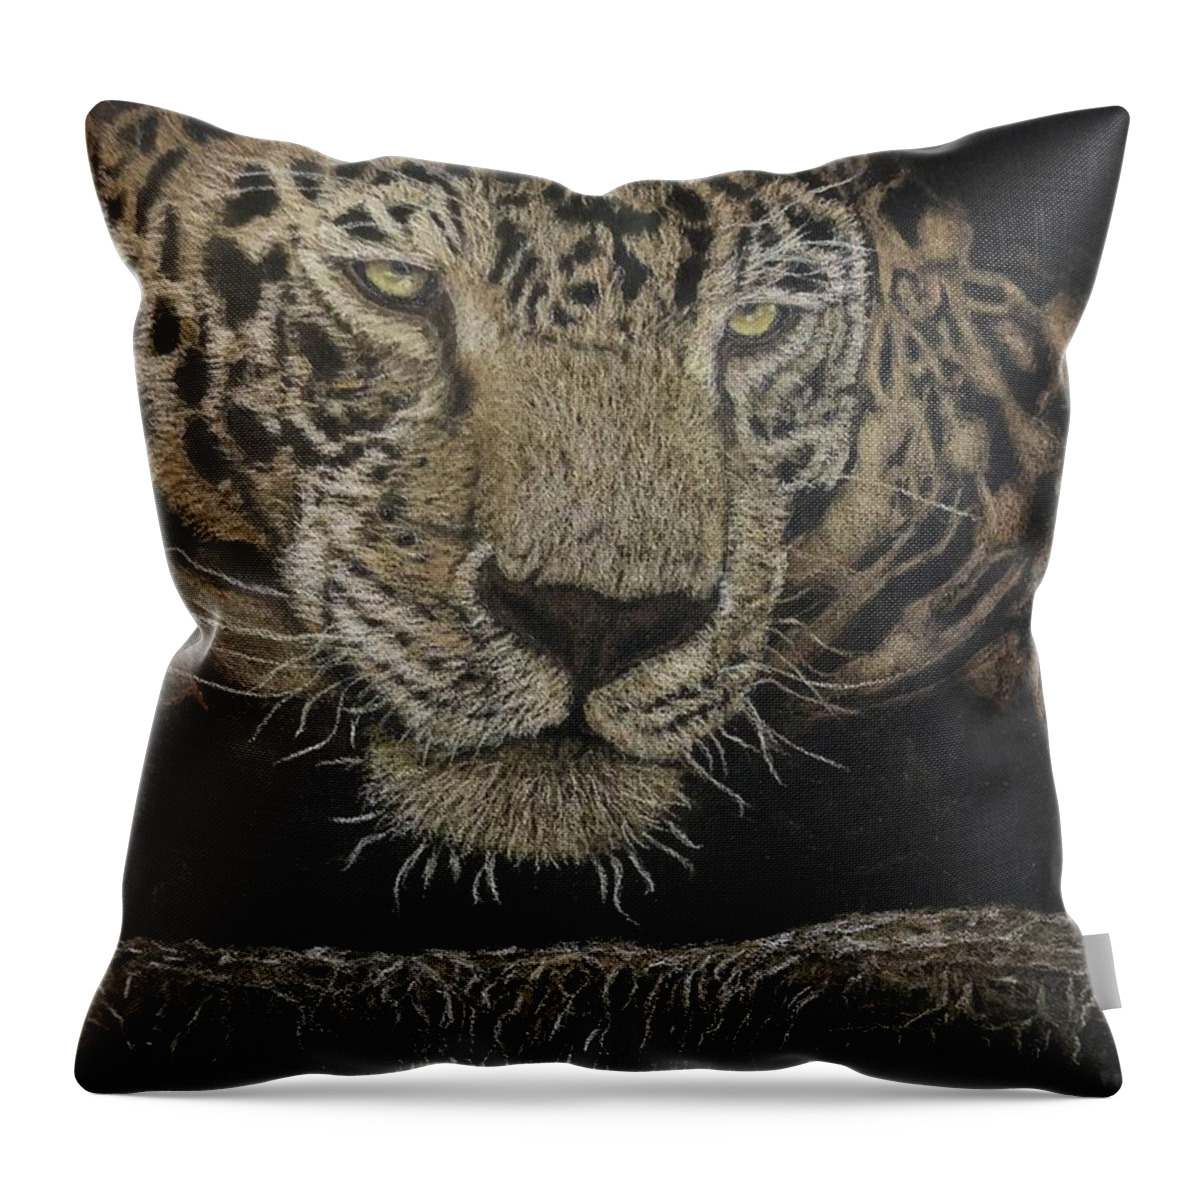 Jaguar Throw Pillow featuring the painting Predator by Brenda Bonfield